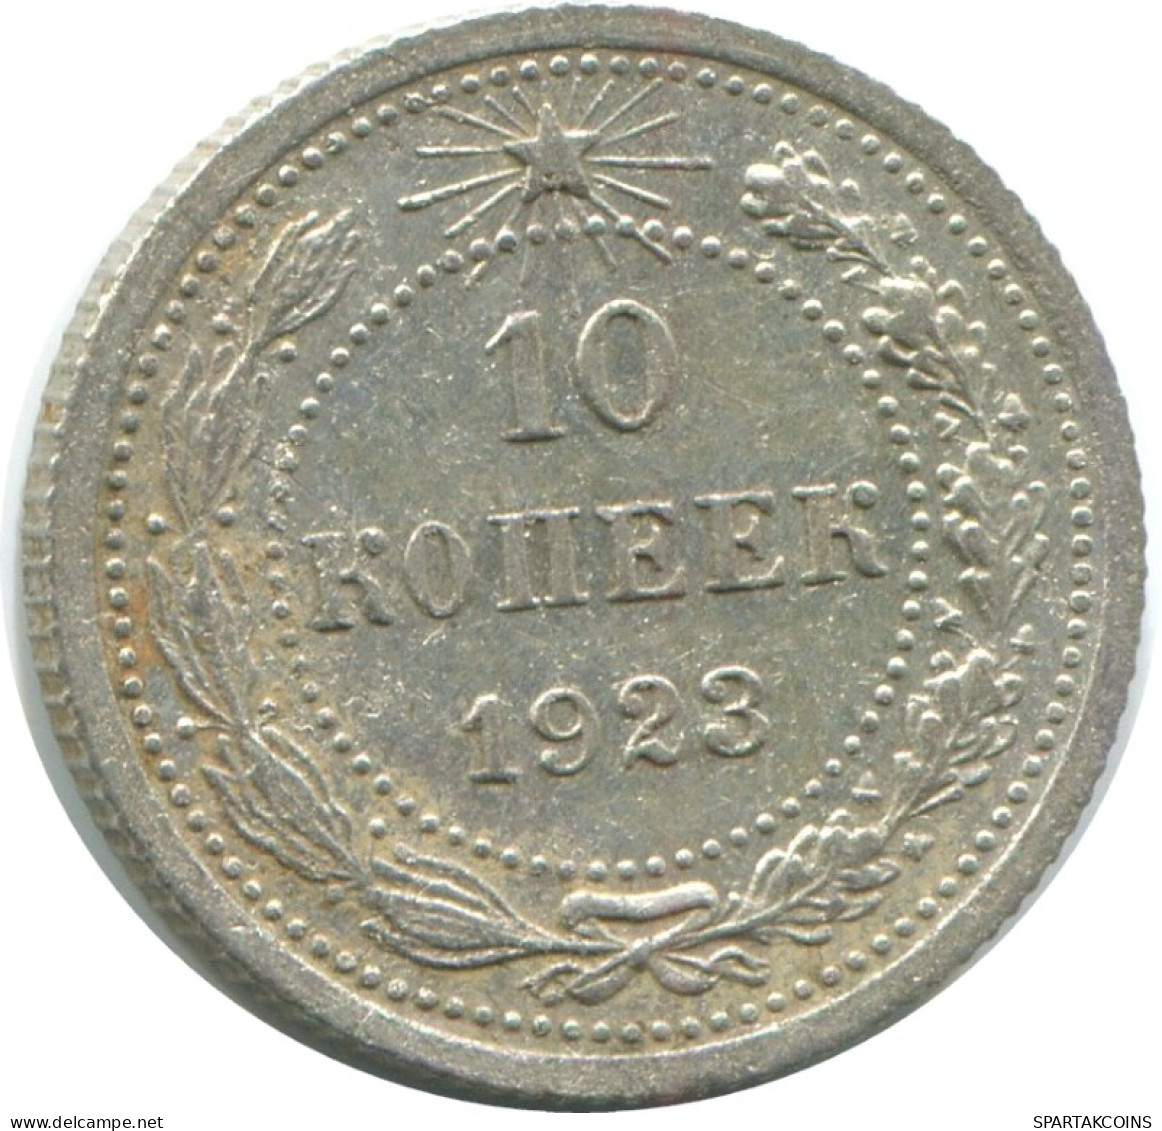 10 KOPEKS 1923 RUSSIA RSFSR SILVER Coin HIGH GRADE #AE997.4.U.A - Russia